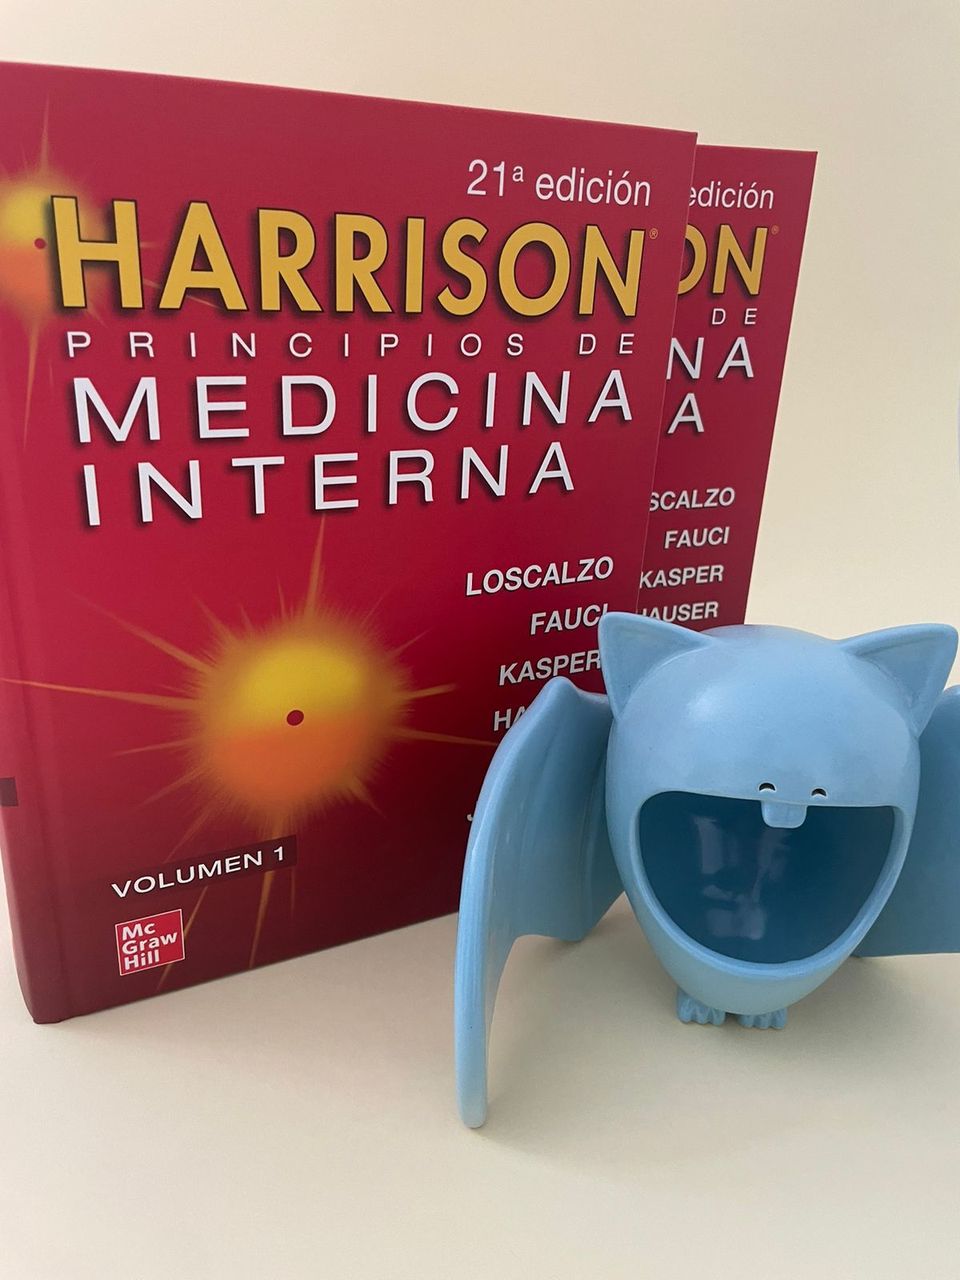 Harrison. Principios de Medicina Interna 21a. Edición